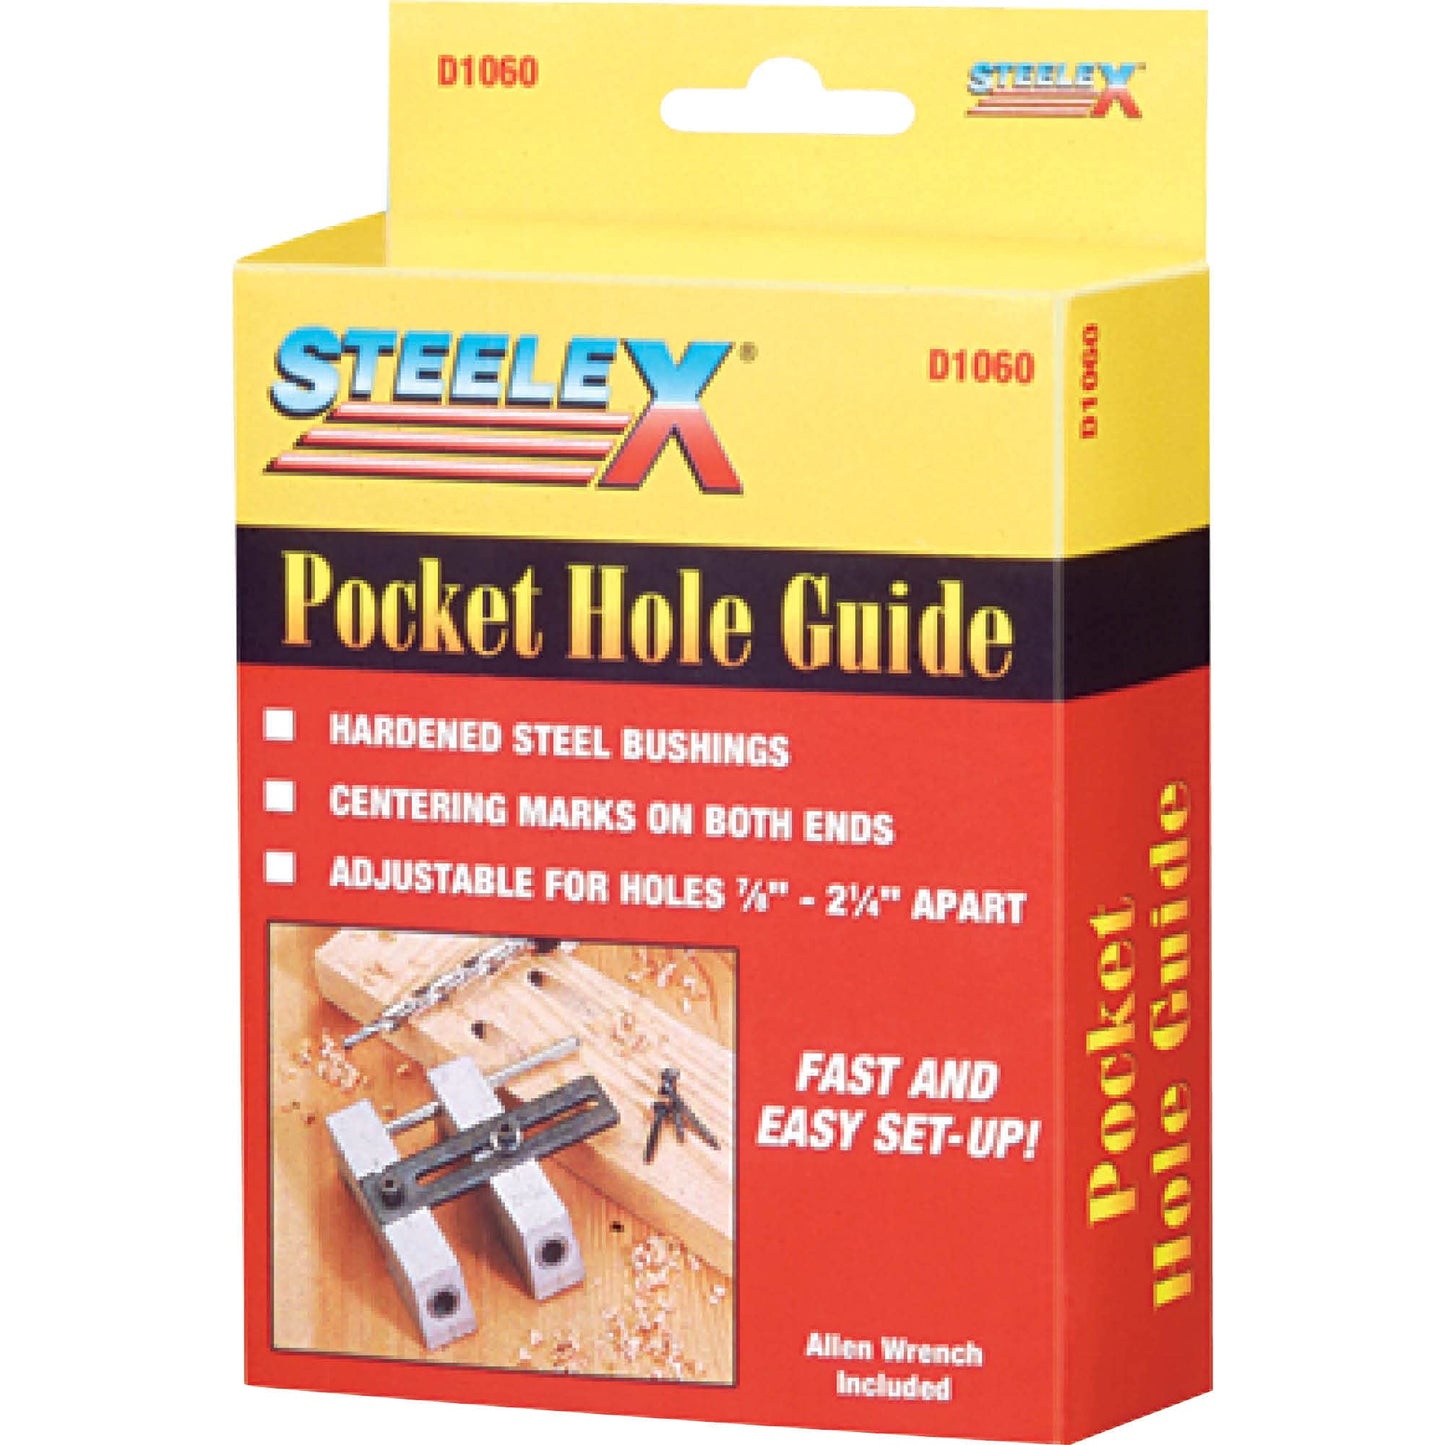 Pocket Hole Guide